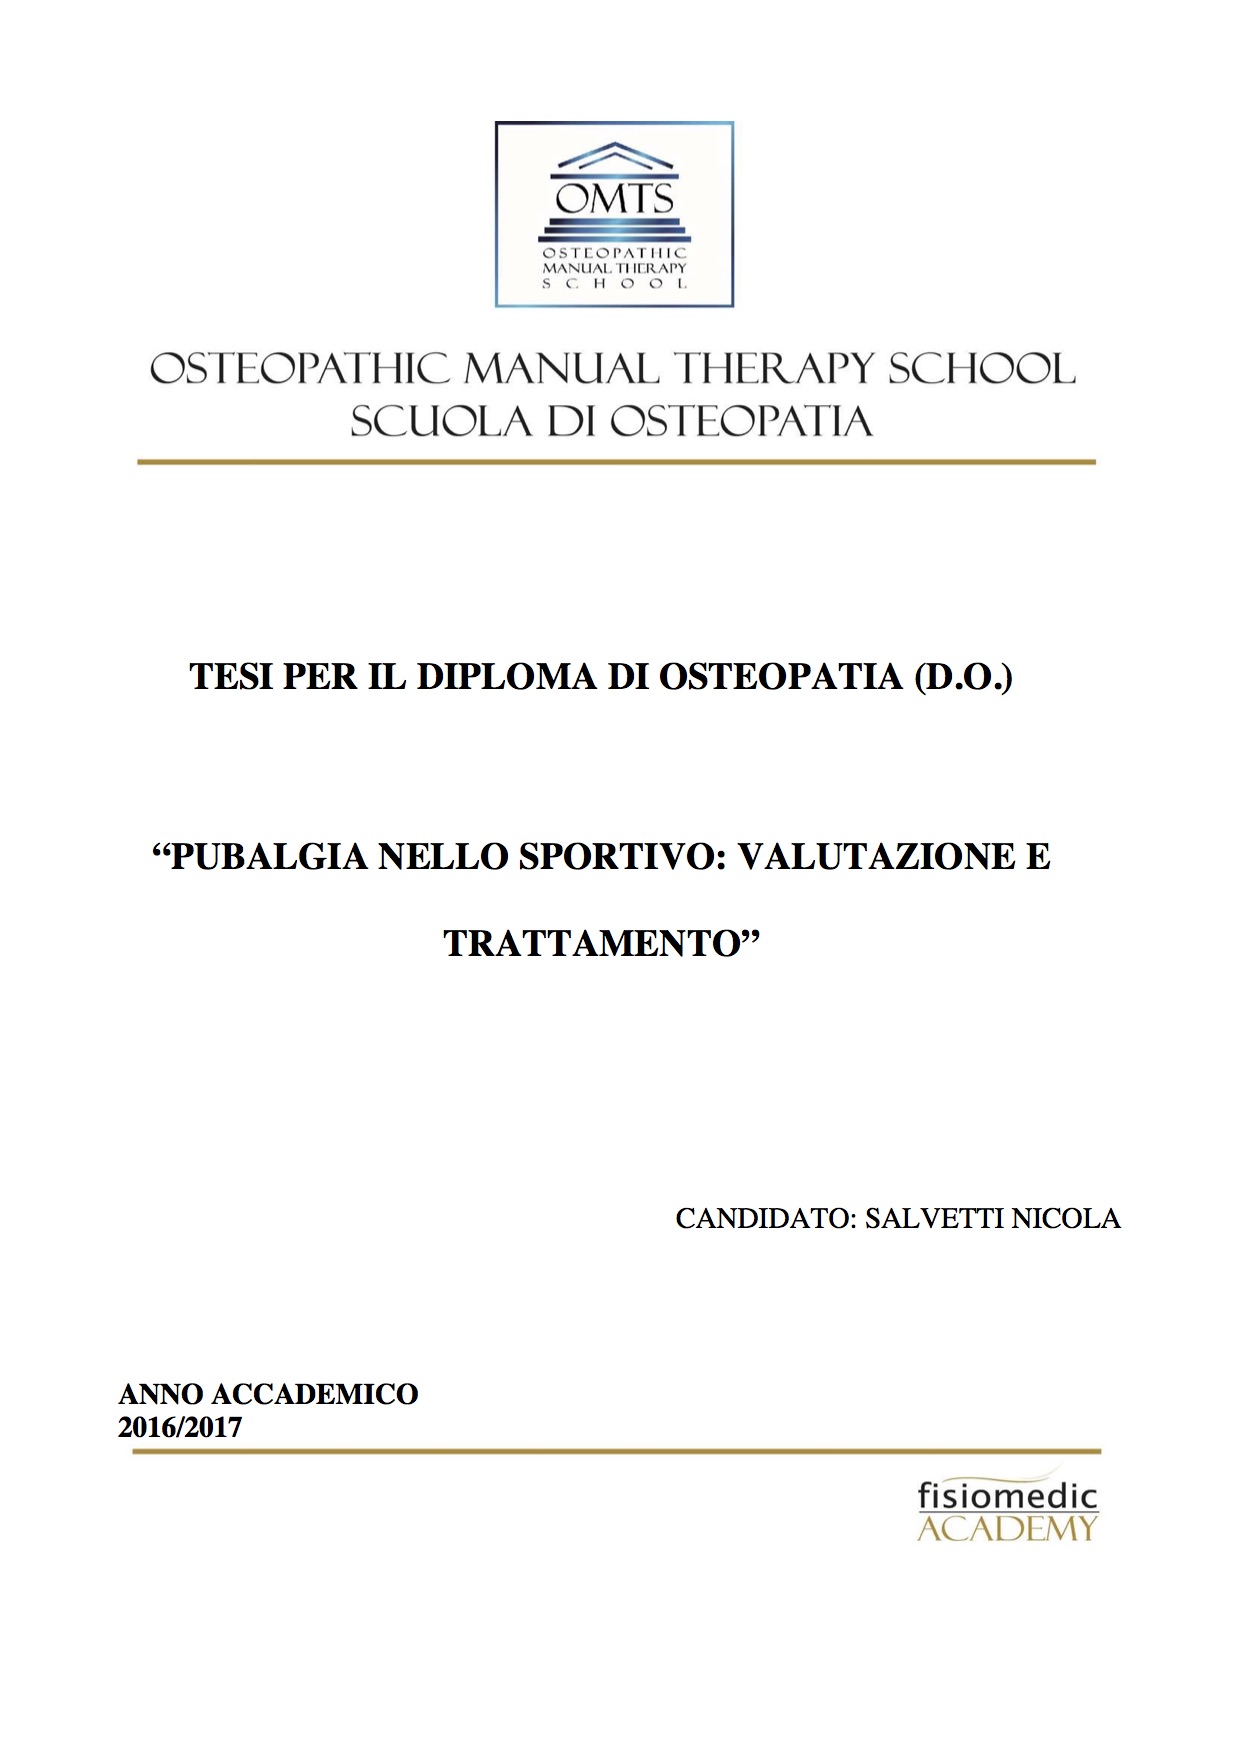 Salvetti Nicola Tesi Diploma Osteopatia 2017